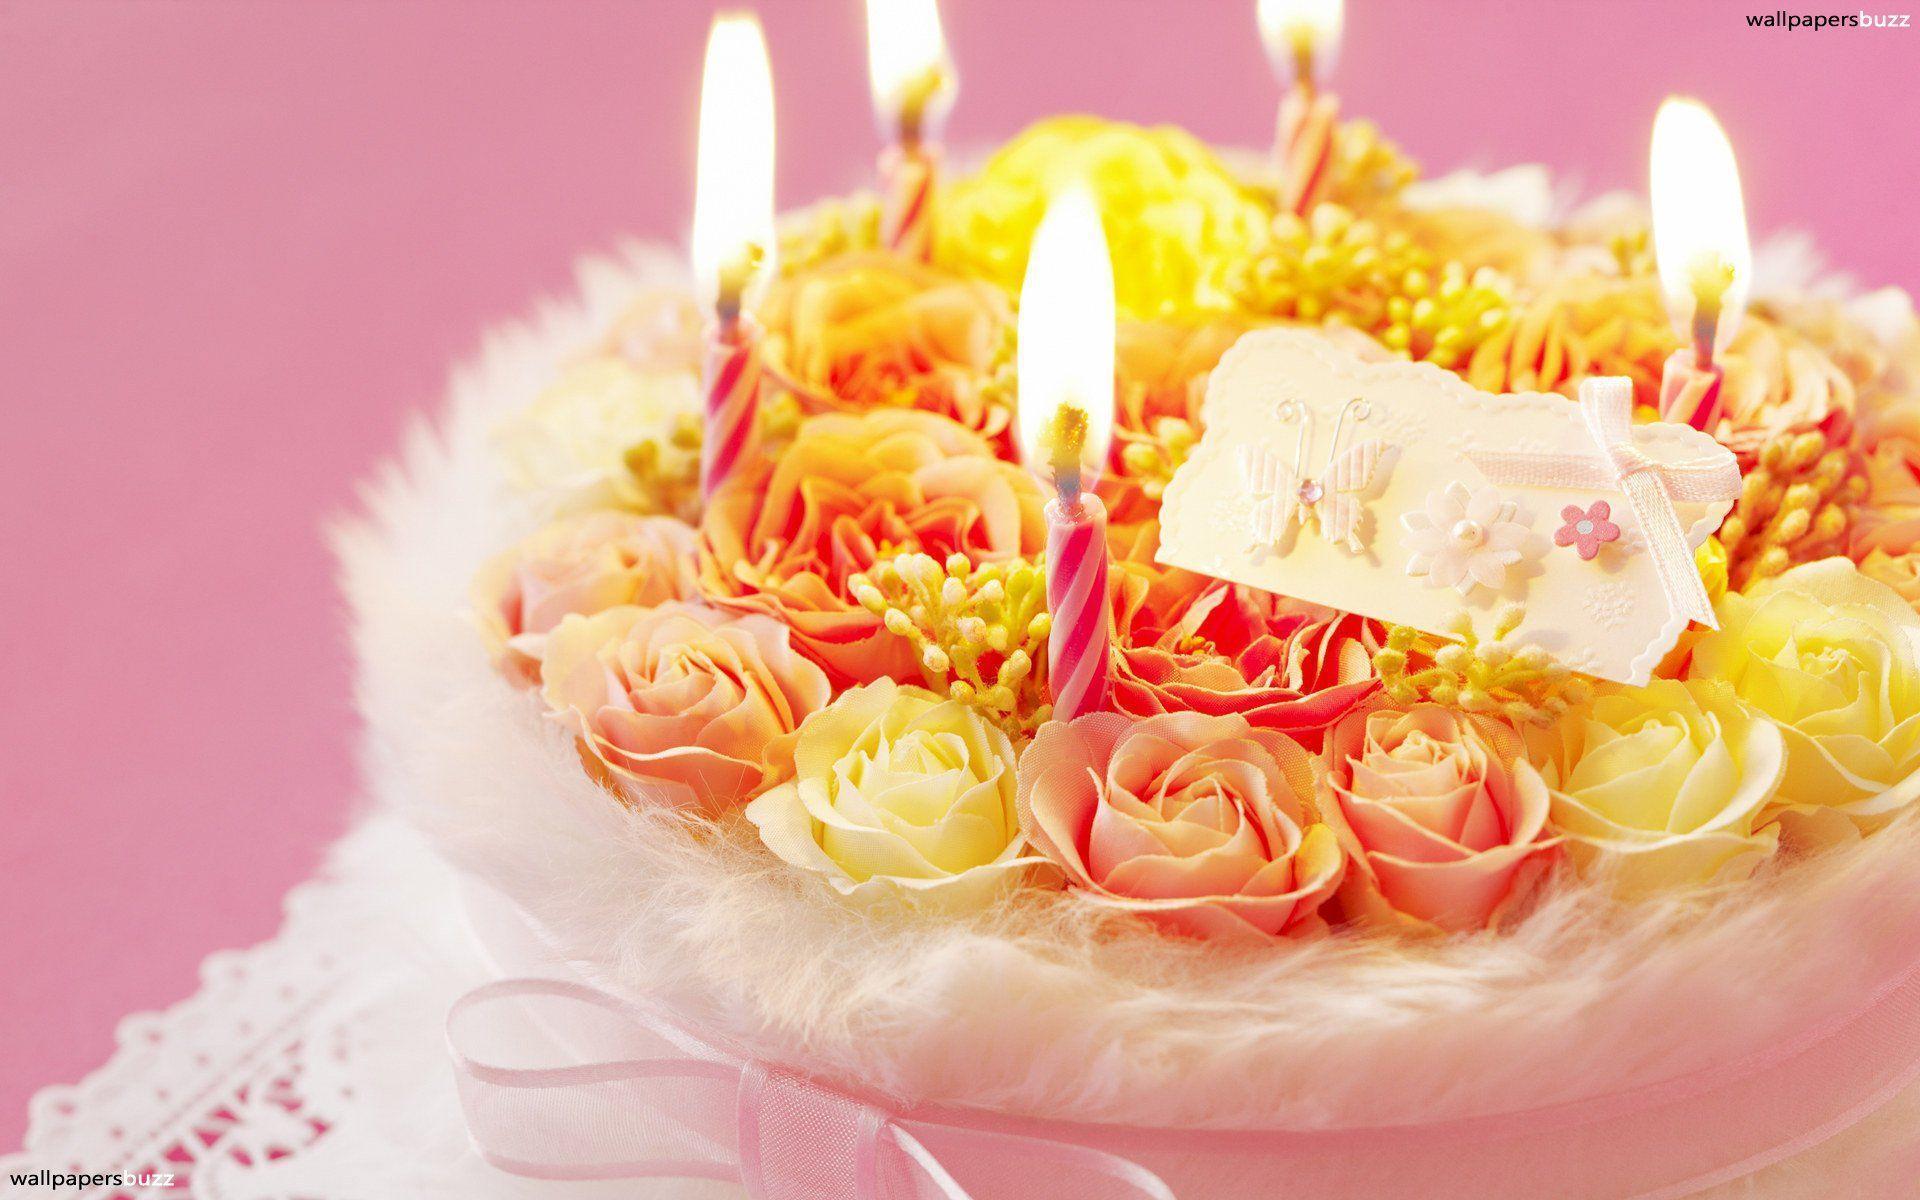 Cute Birthday Gift HD Widescreen Image. HD Wallpaper Source